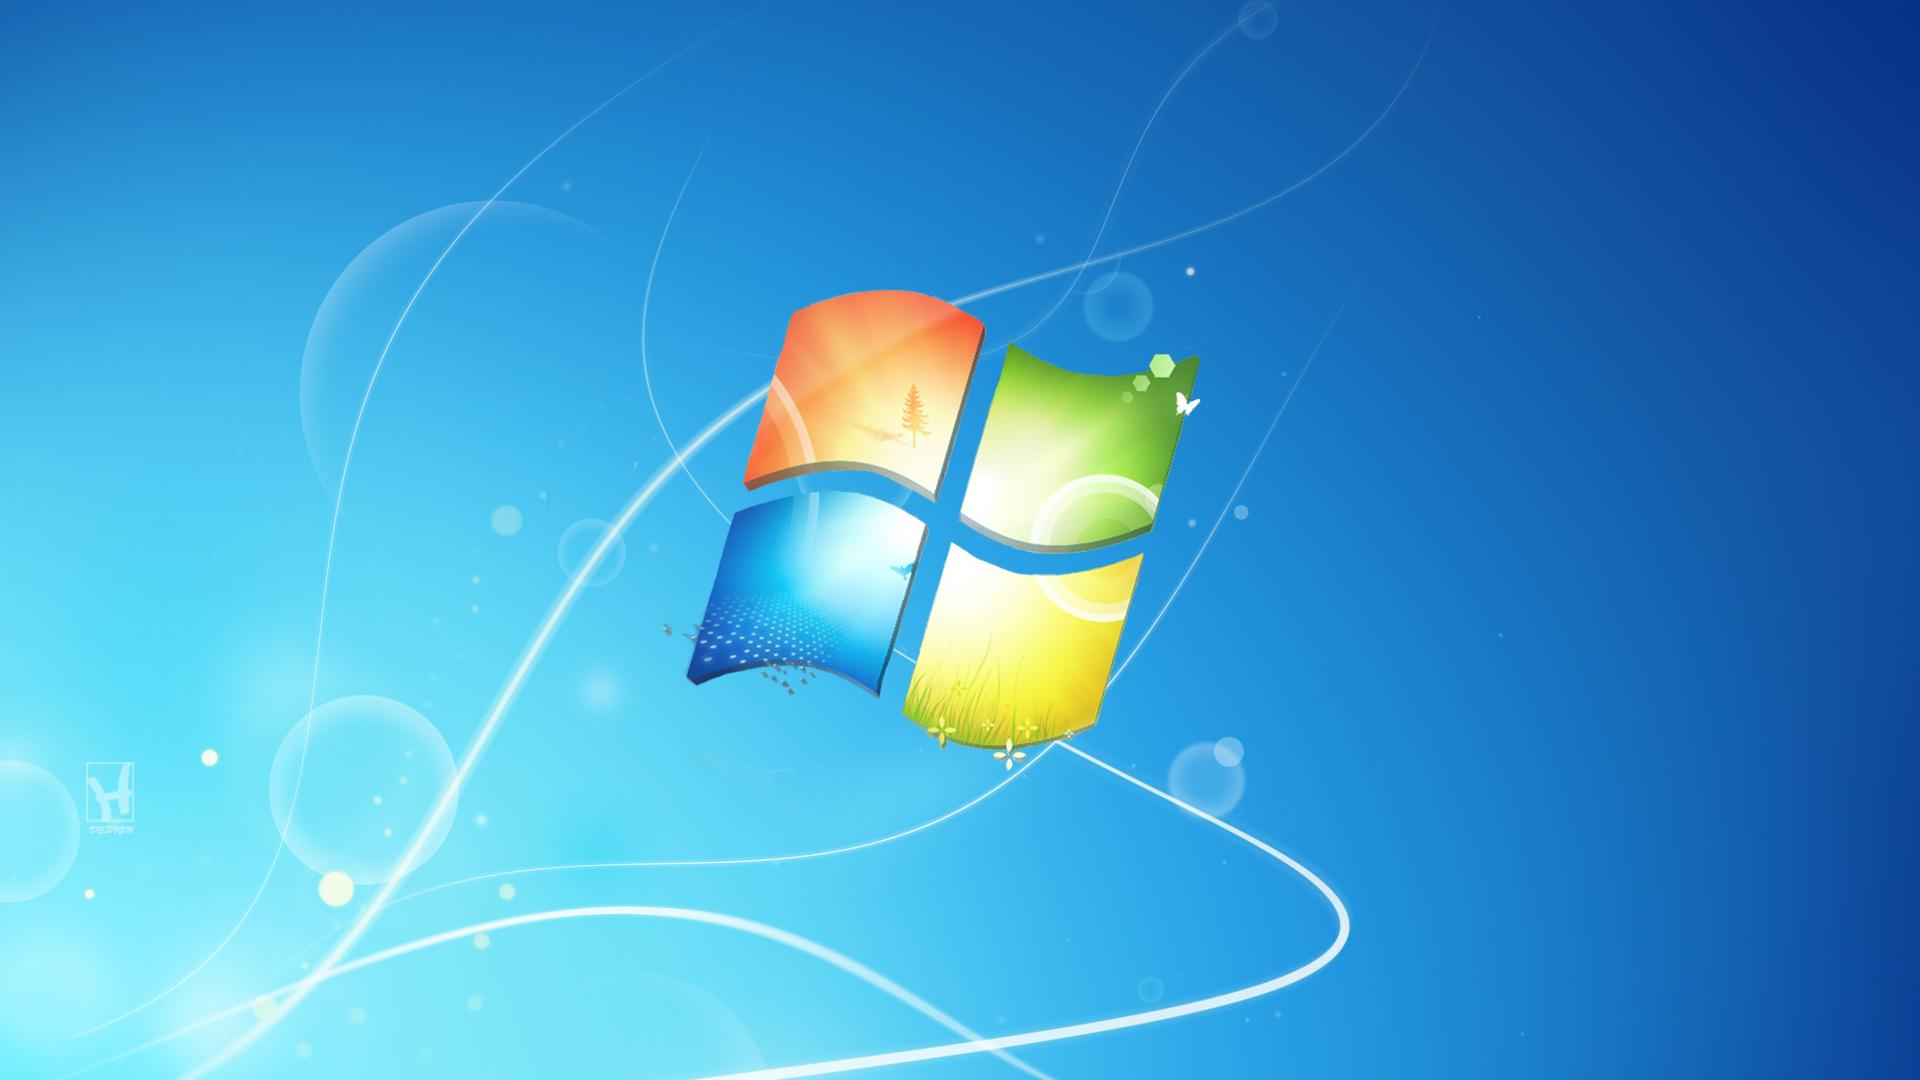 Windows Xp Background Original Blue